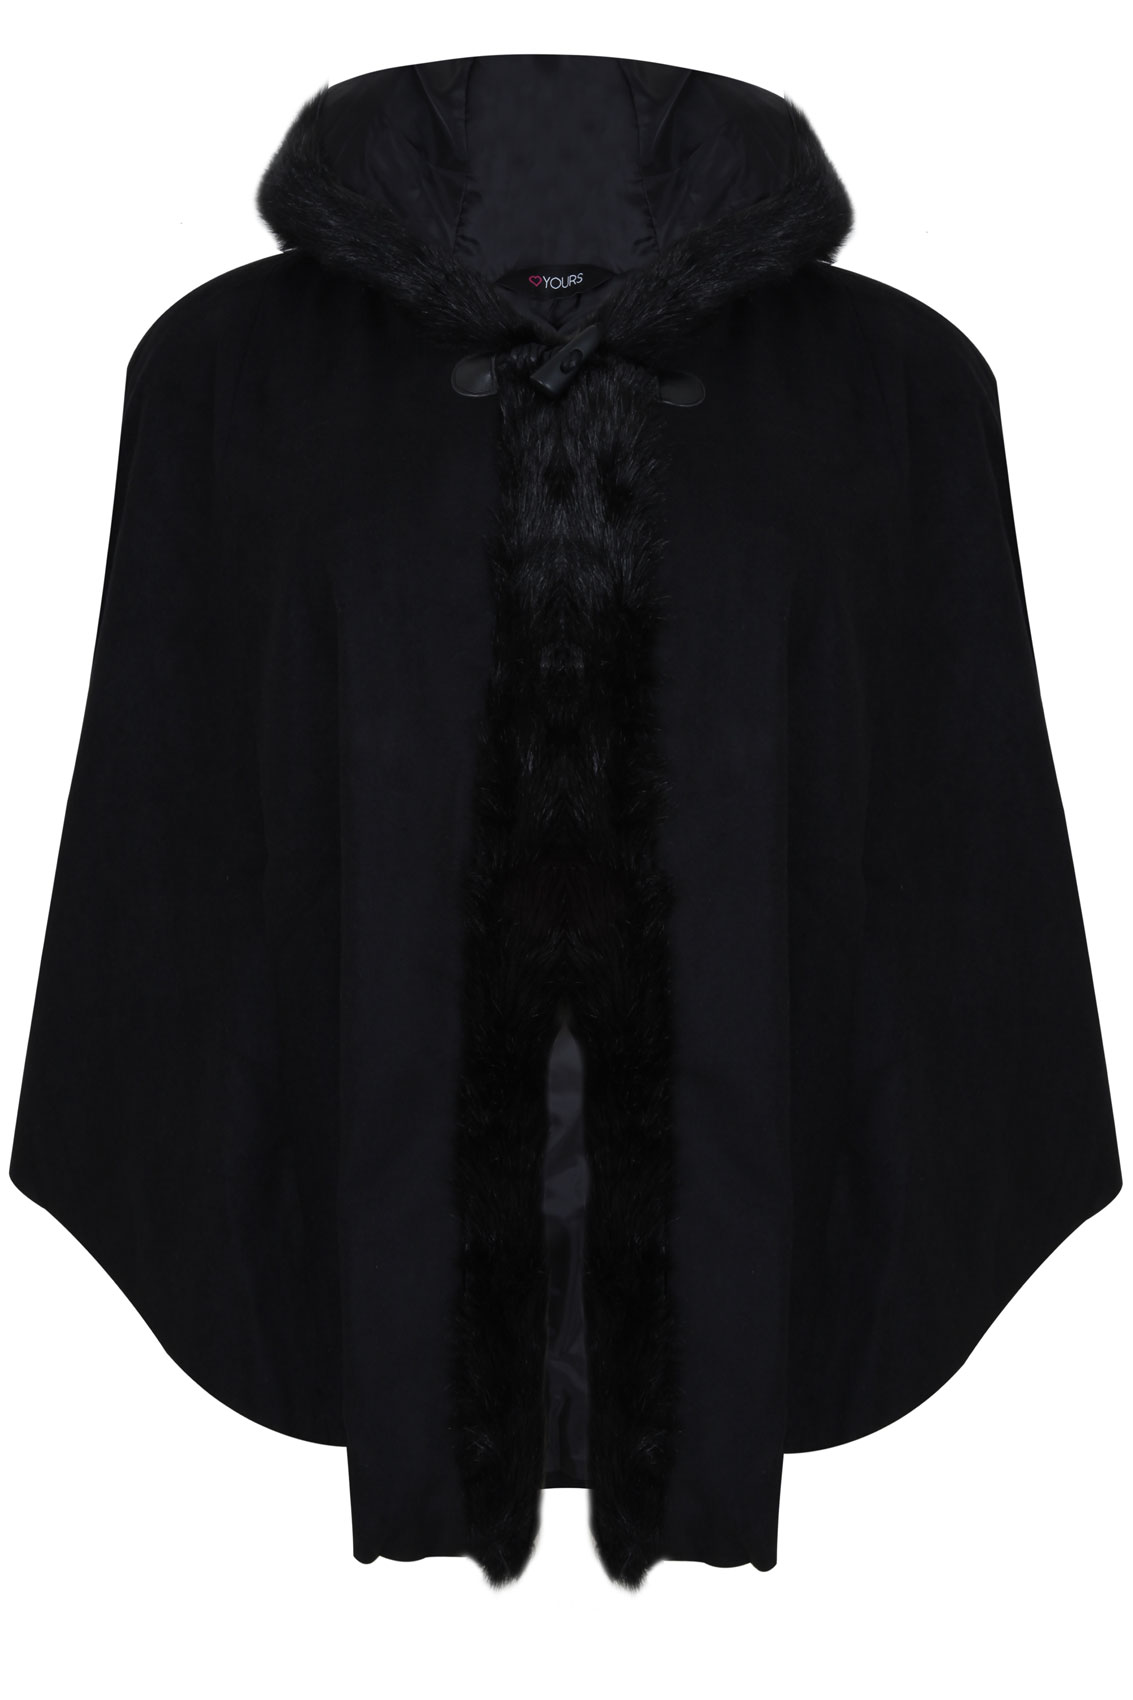 Black Cape With Fur Trim Hood Plus Size 16 to 34